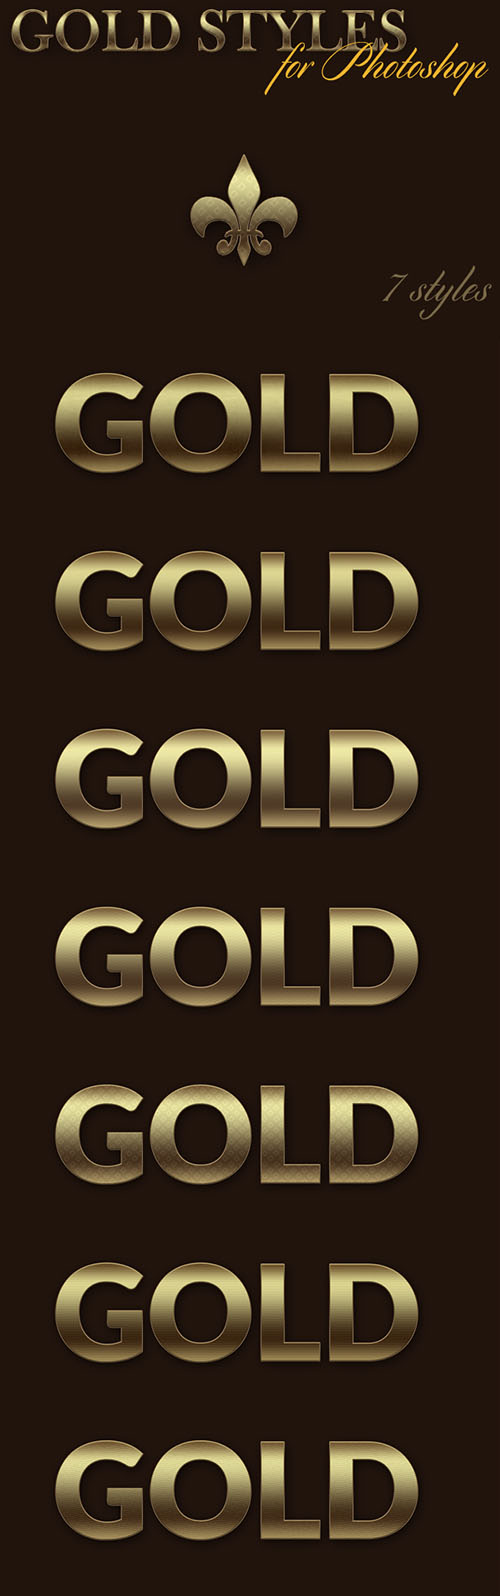 Designtnt - Gold Photoshop Styles